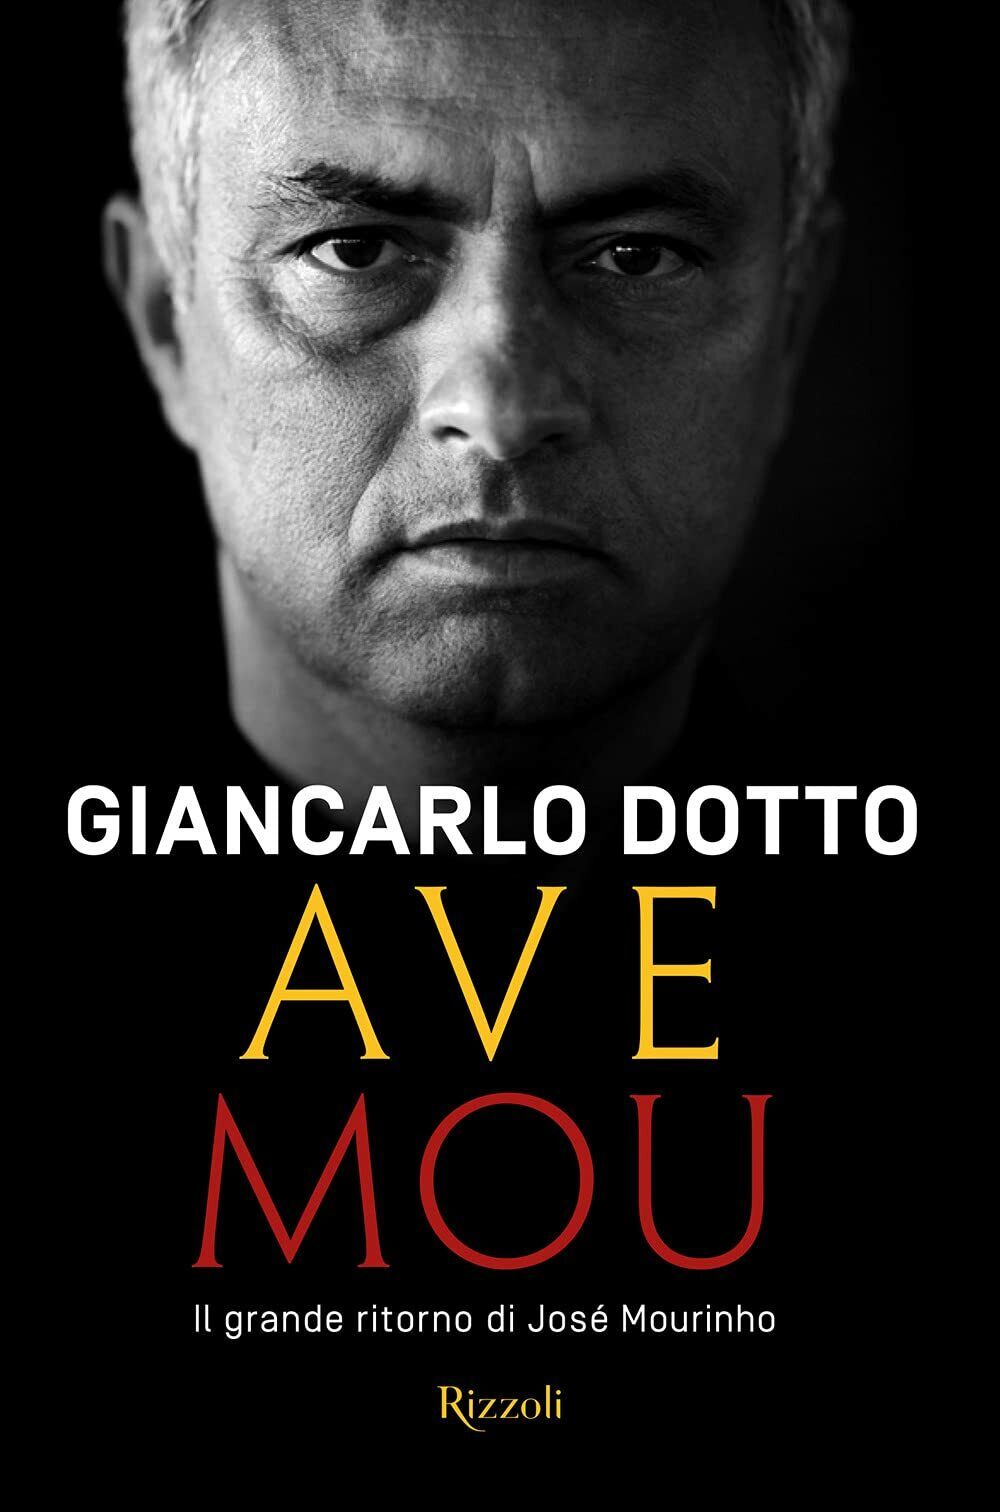 Ave Mou - Giancarlo Dotto - Rizzoli, 2021